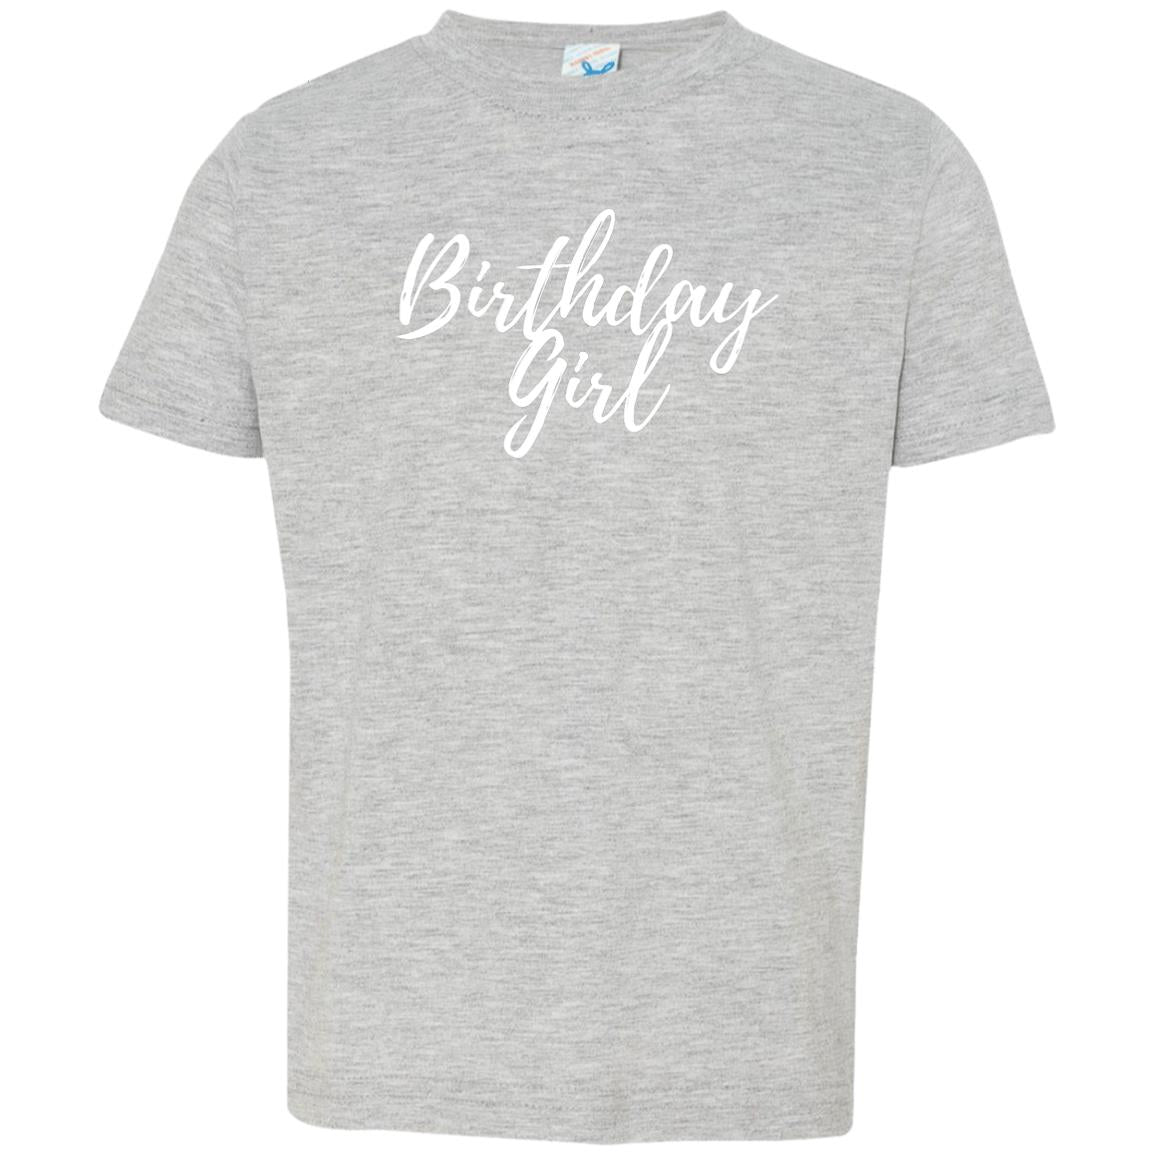 Birthday Girl (White Print) 3321 Toddler Jersey T-Shirt